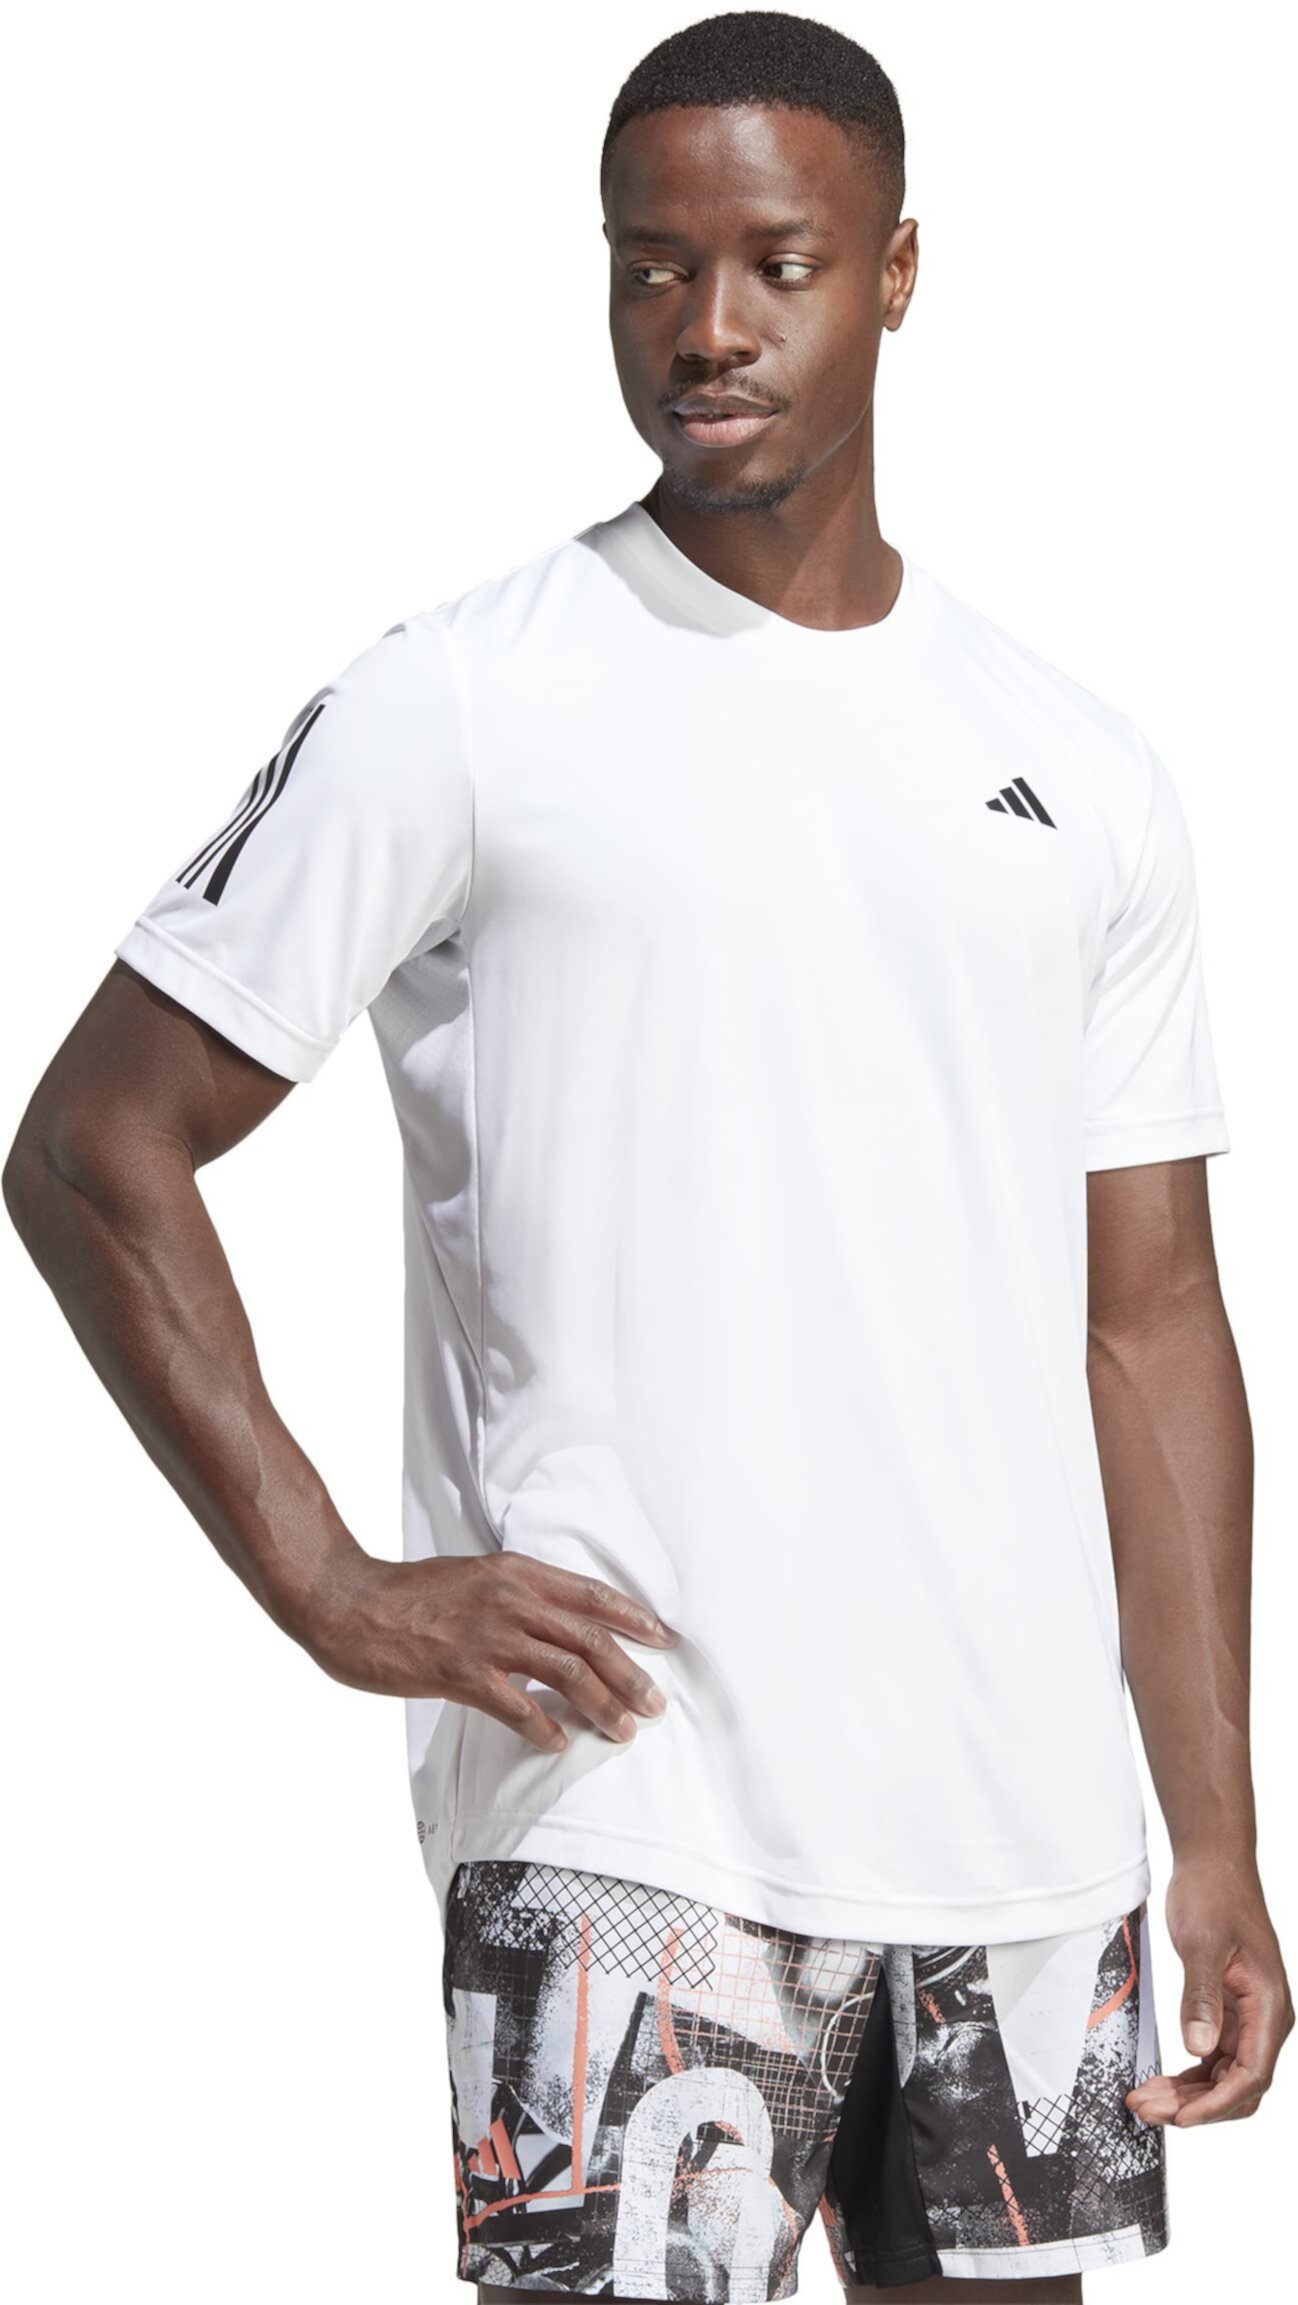 Теннисная футболка Club с 3 полосками Adidas